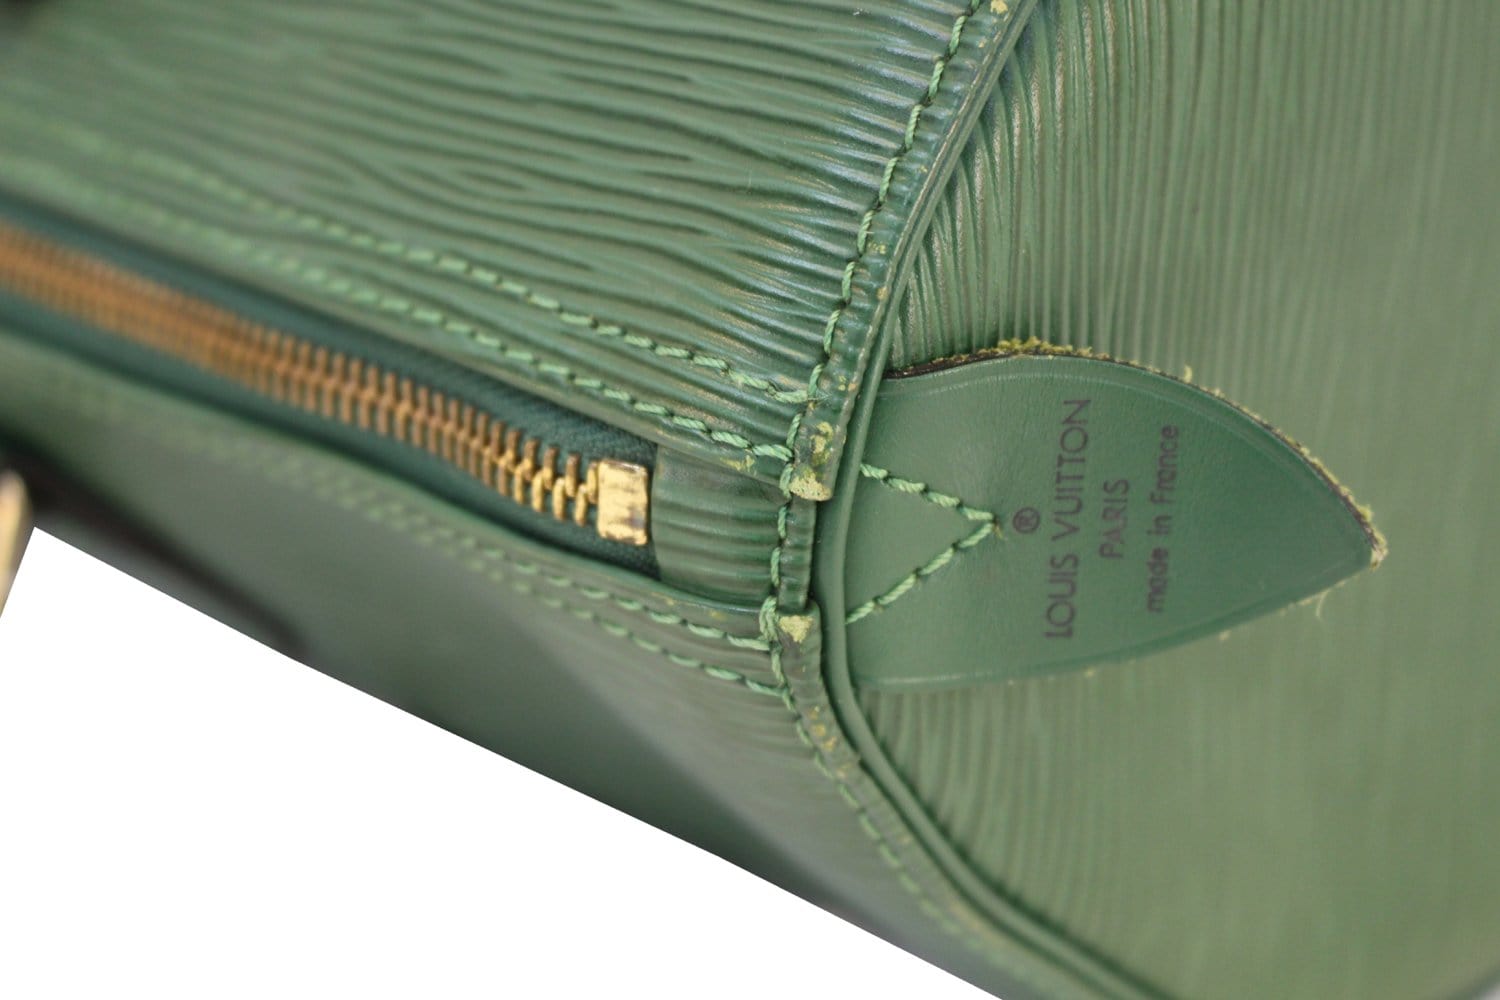 Speedy leather handbag Louis Vuitton Blue in Leather - 35926576